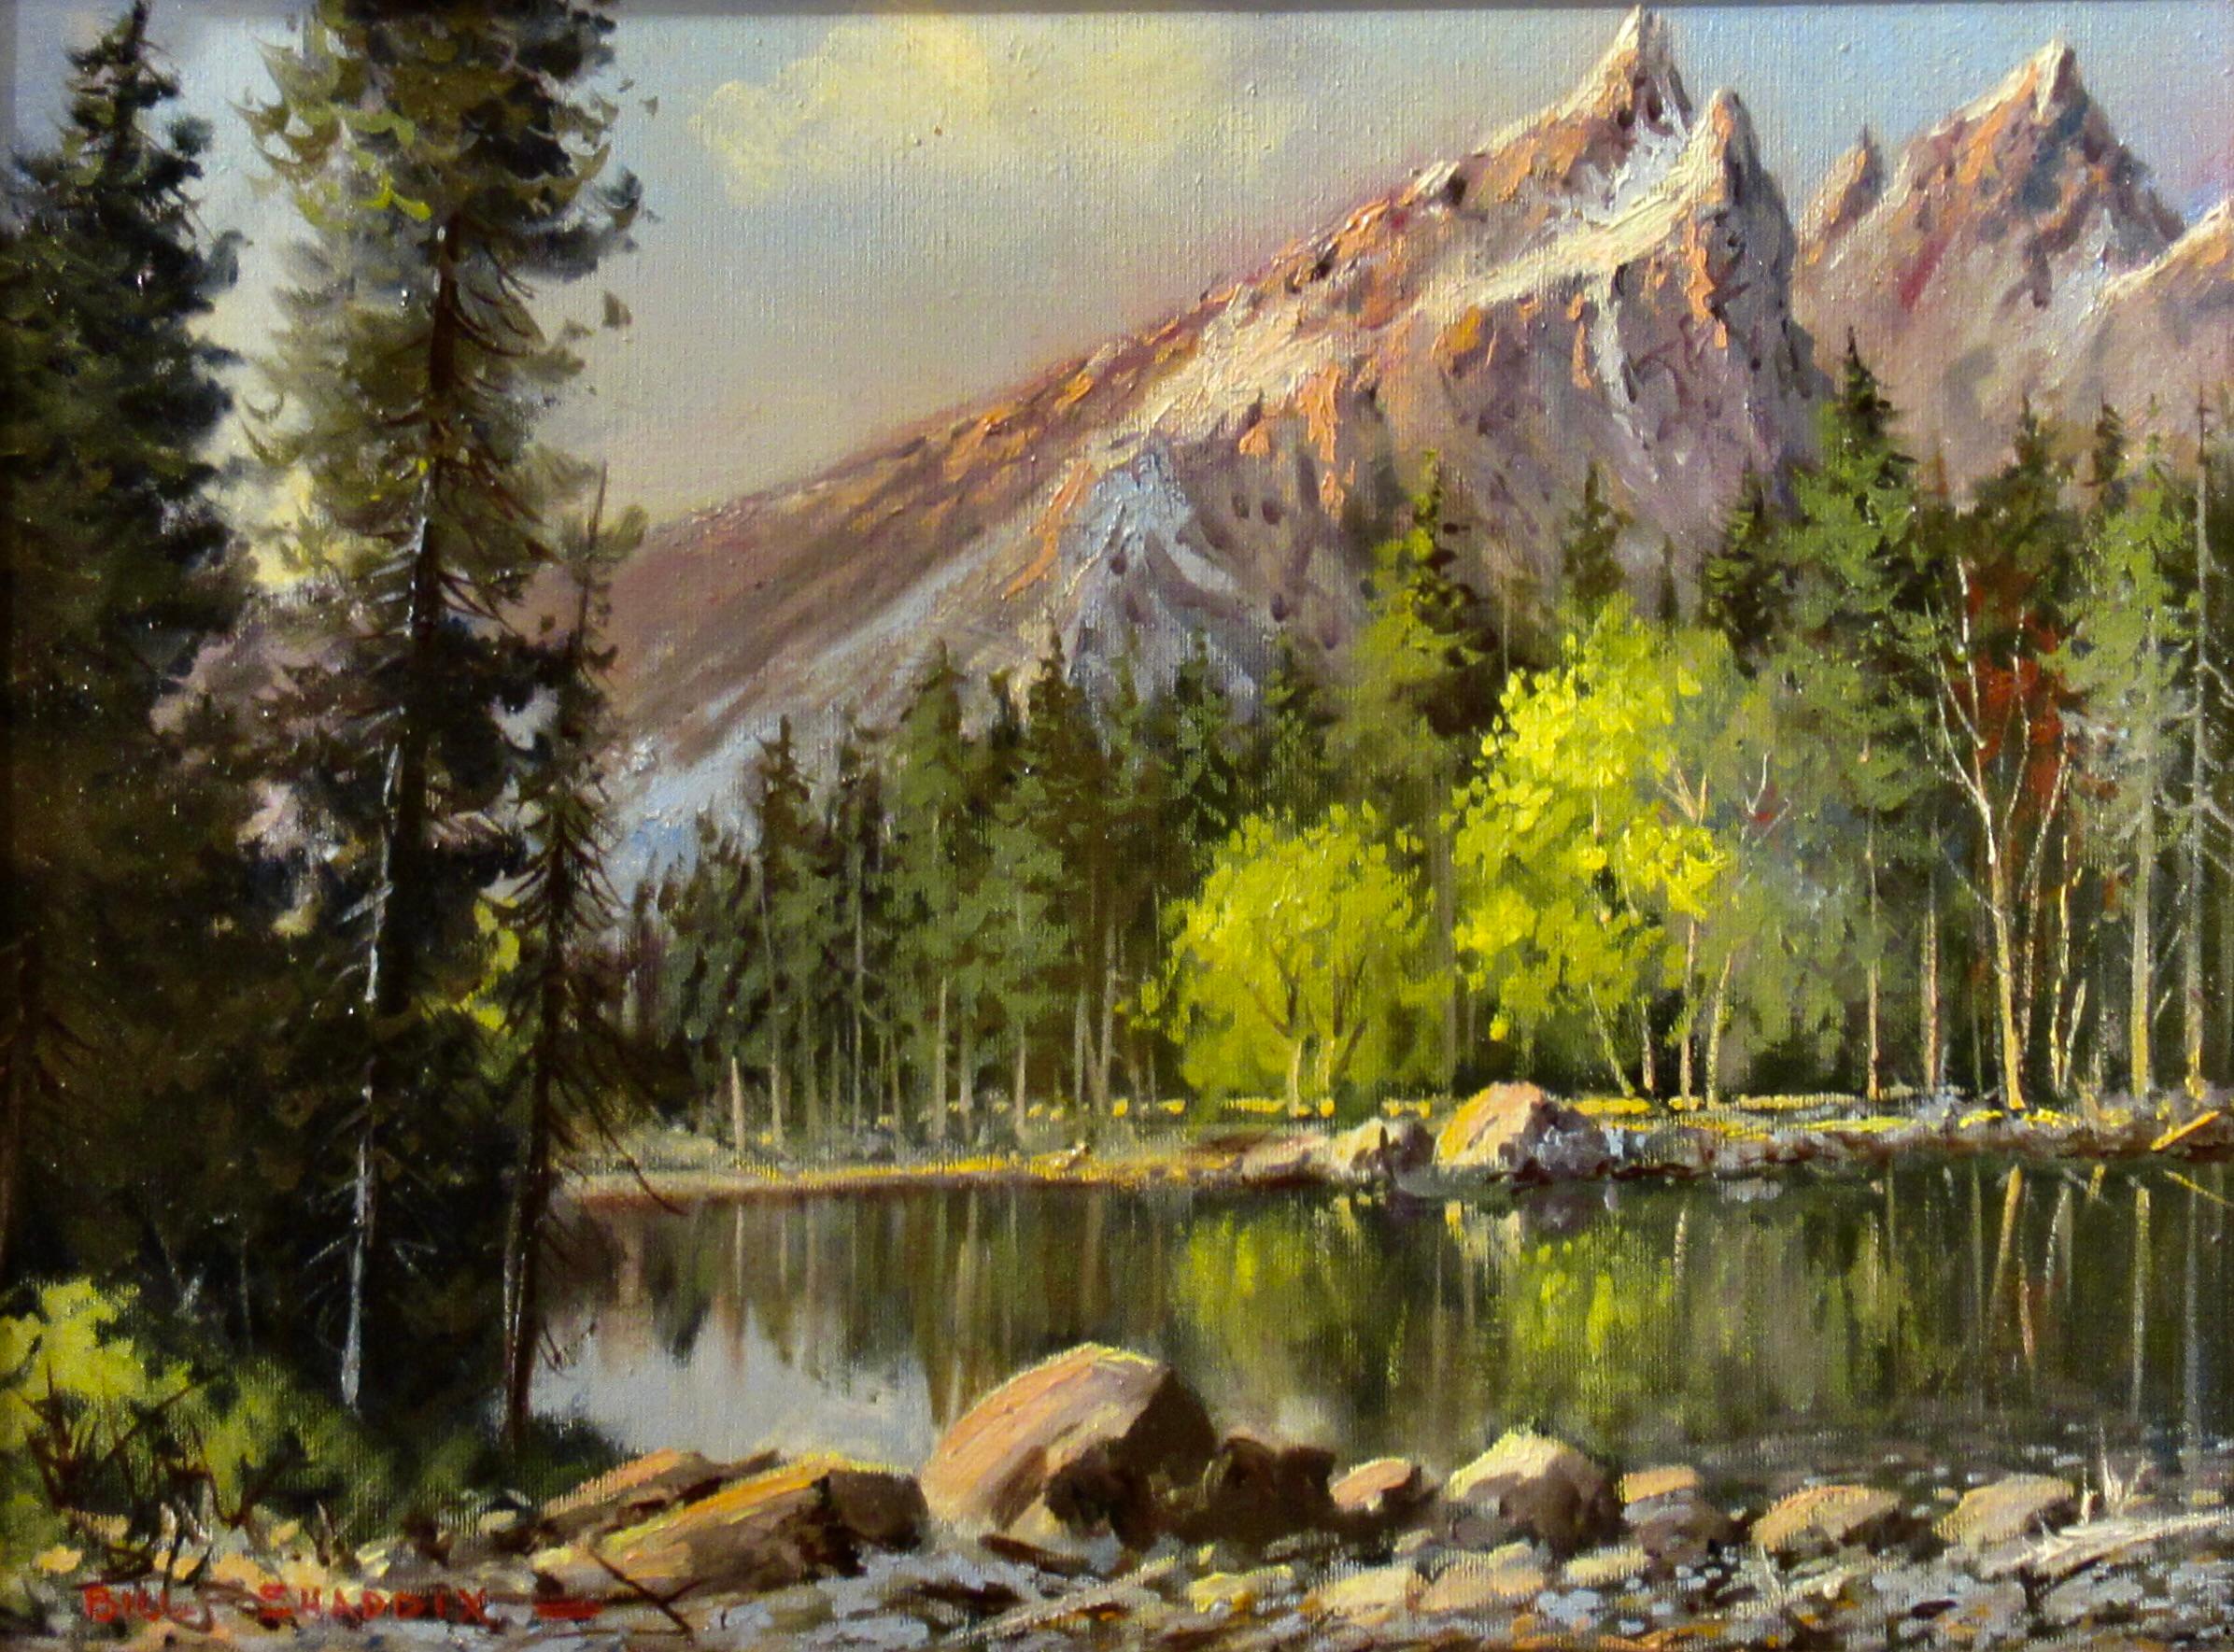 California Landscape #I - Painting by Bill Shaddix